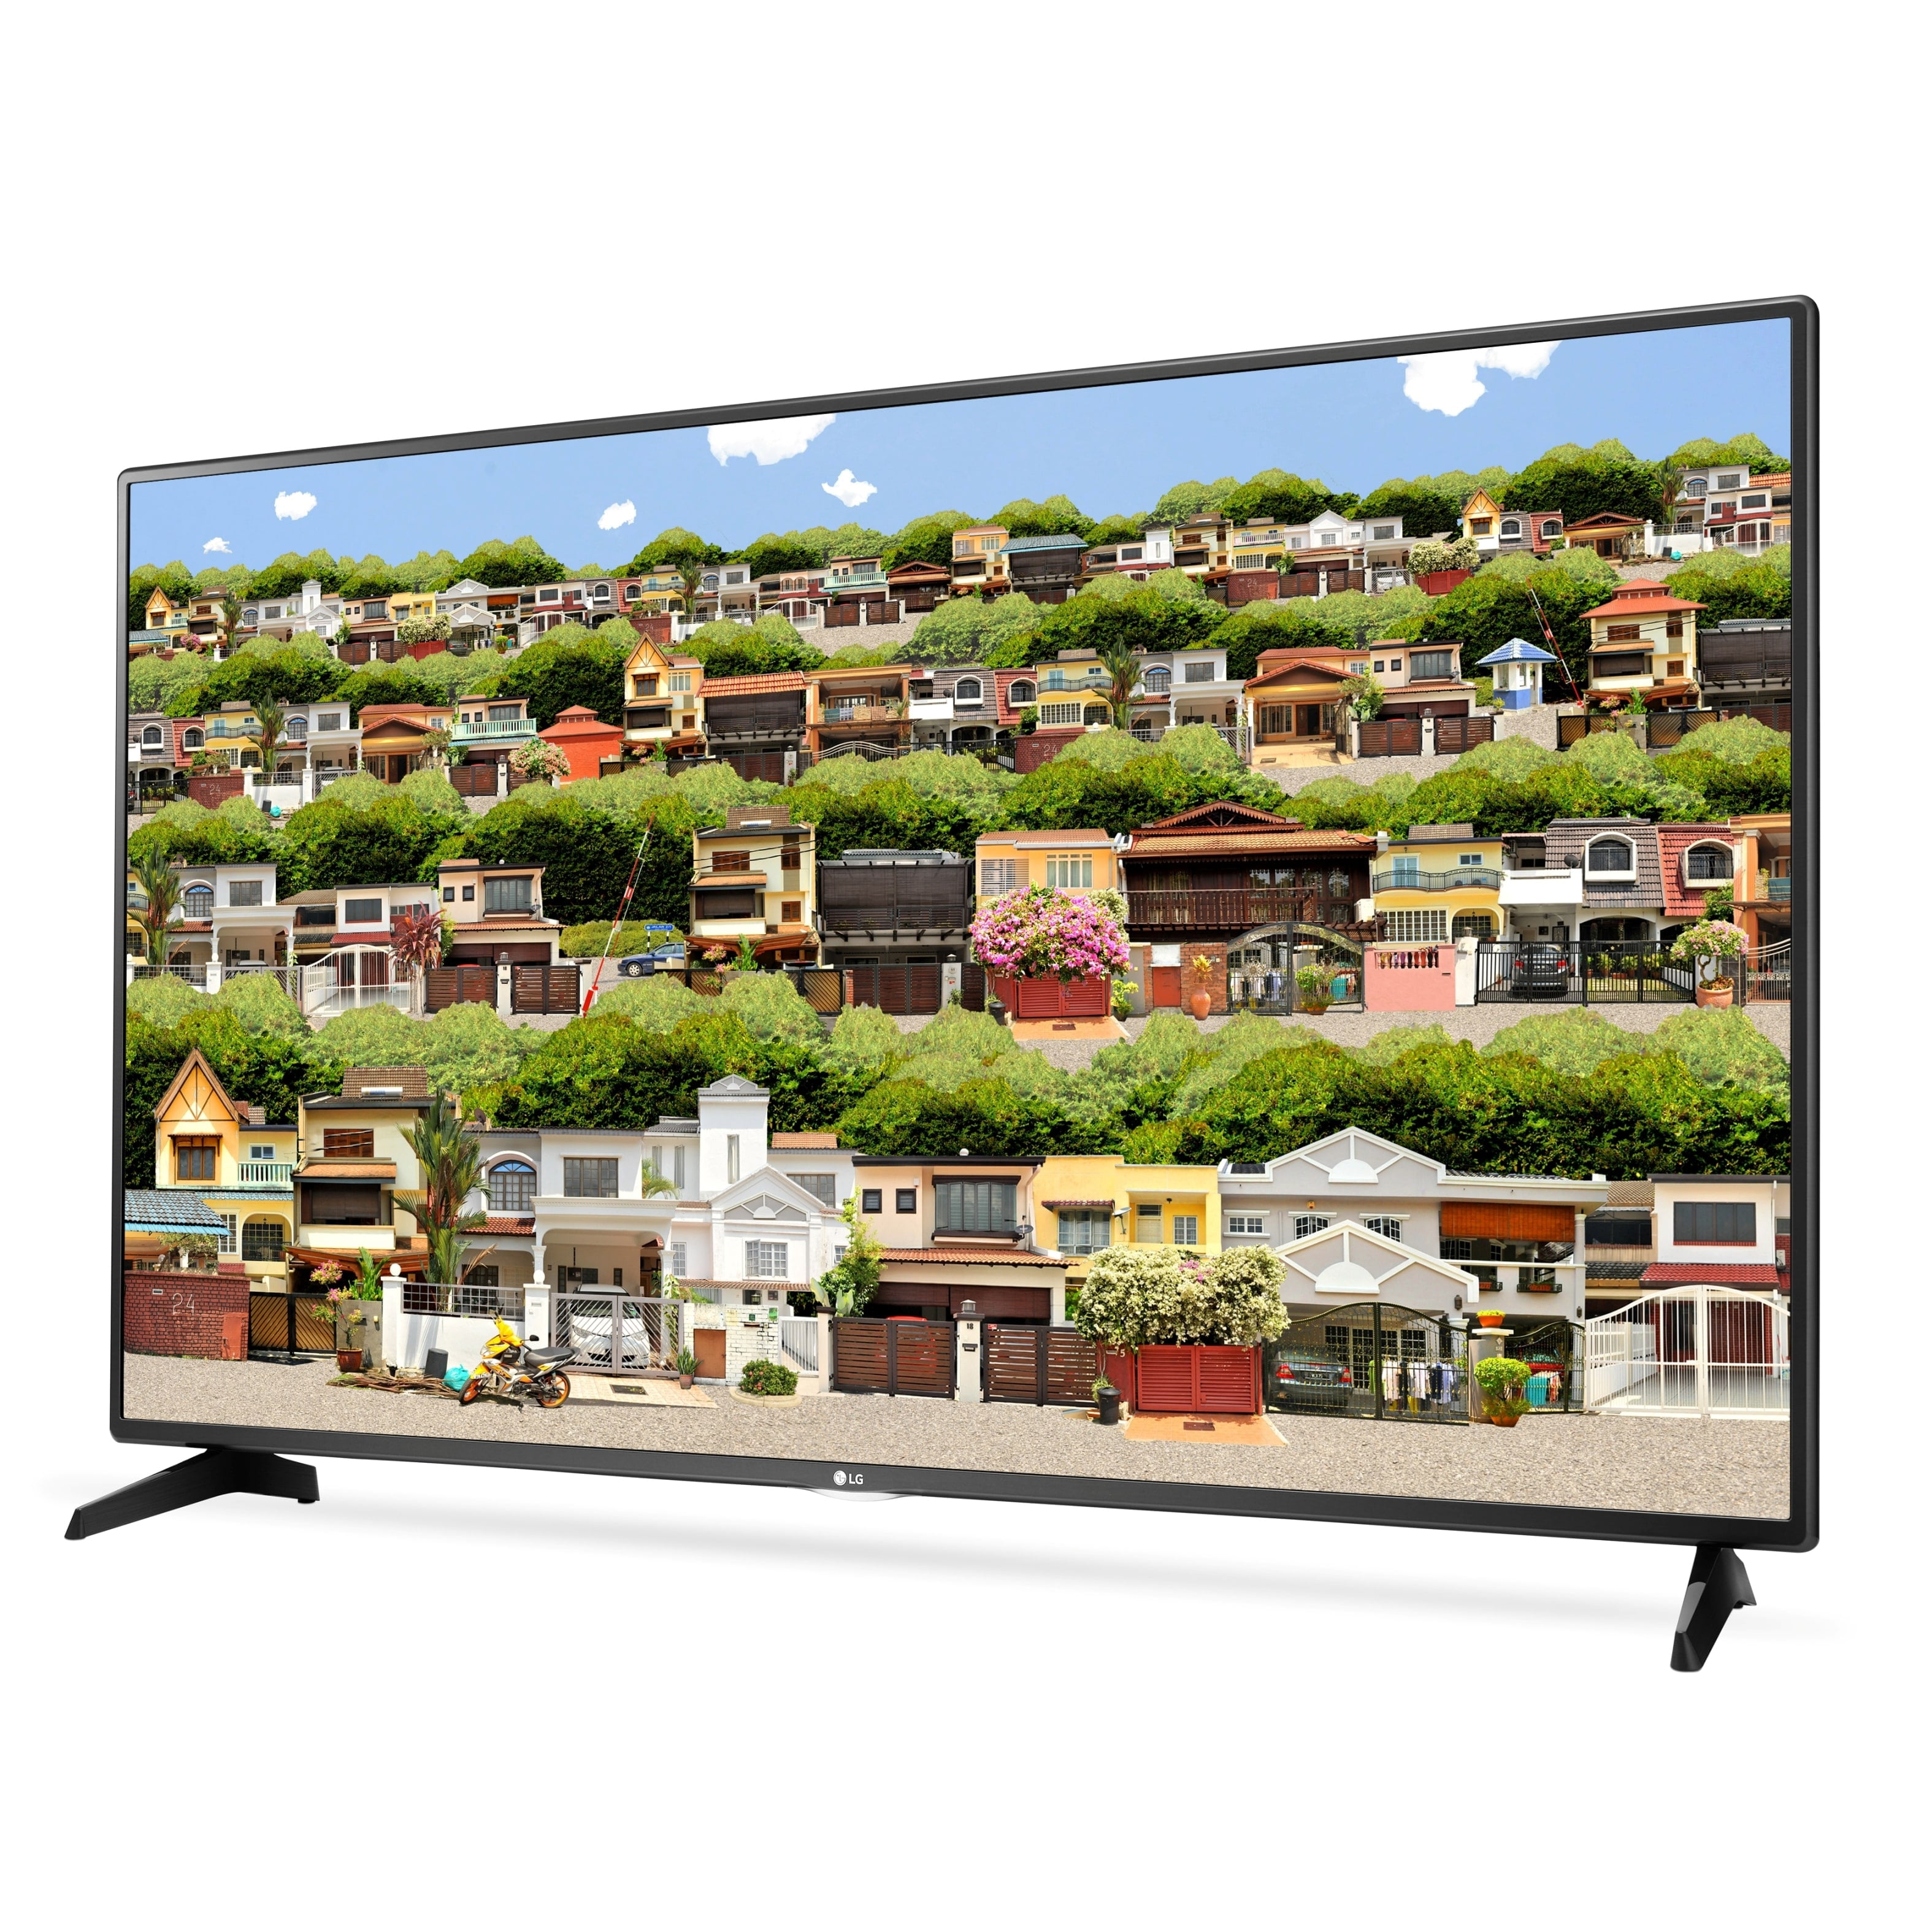 LG - 55" Diagonal Class (54.6" viewable) - LH5750 series LED-backlit LCD - Smart TV - webOS - 1080p (Full HD) 1920 x 1080 - Walmart.com